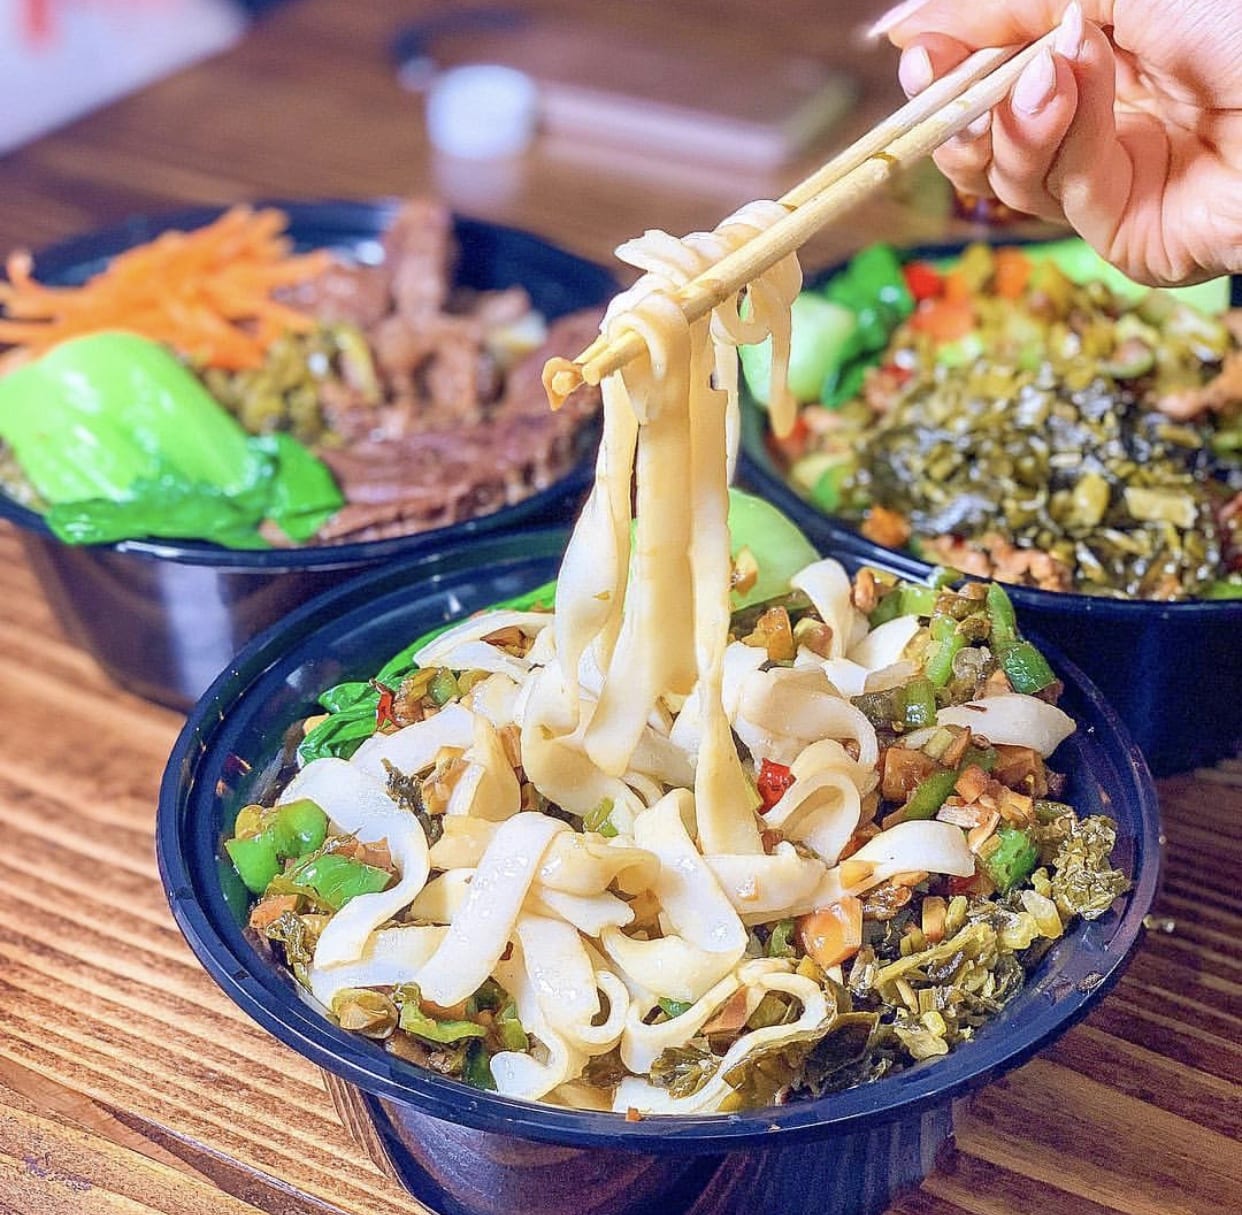 Gai Ma: The Hunan Cuisine Taking Over New York City